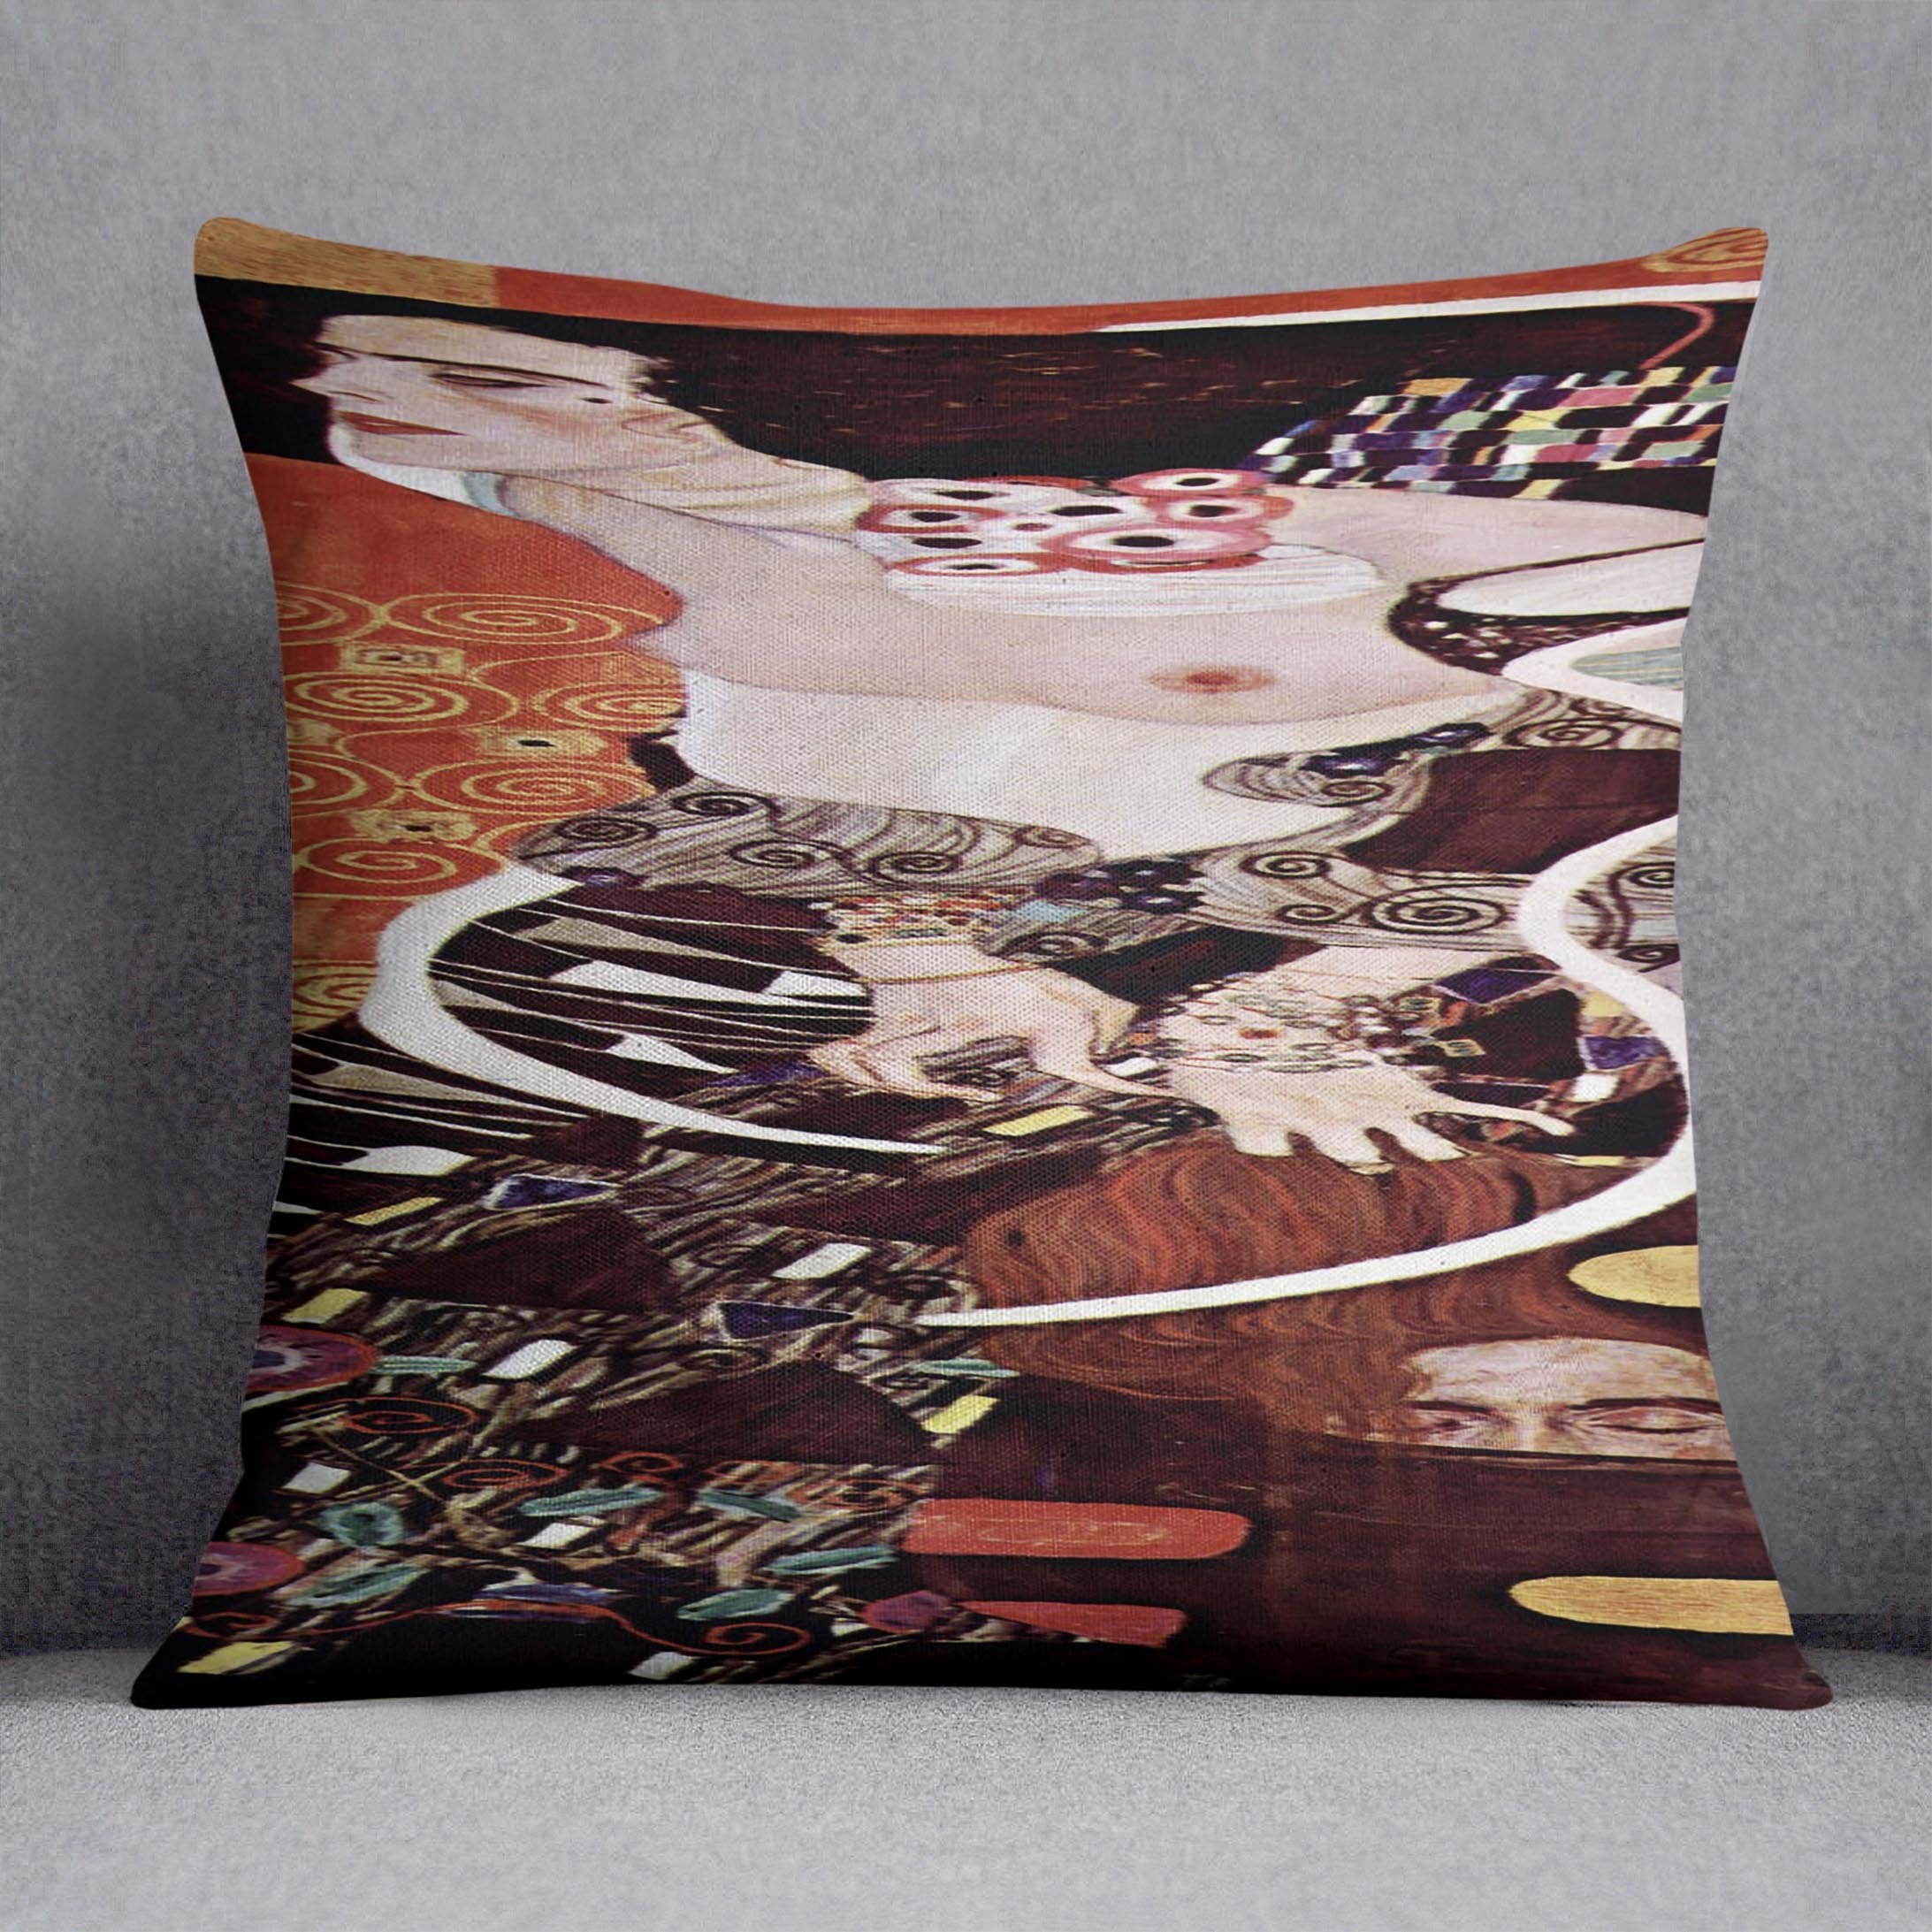 Judith II by Klimt Throw Pillow